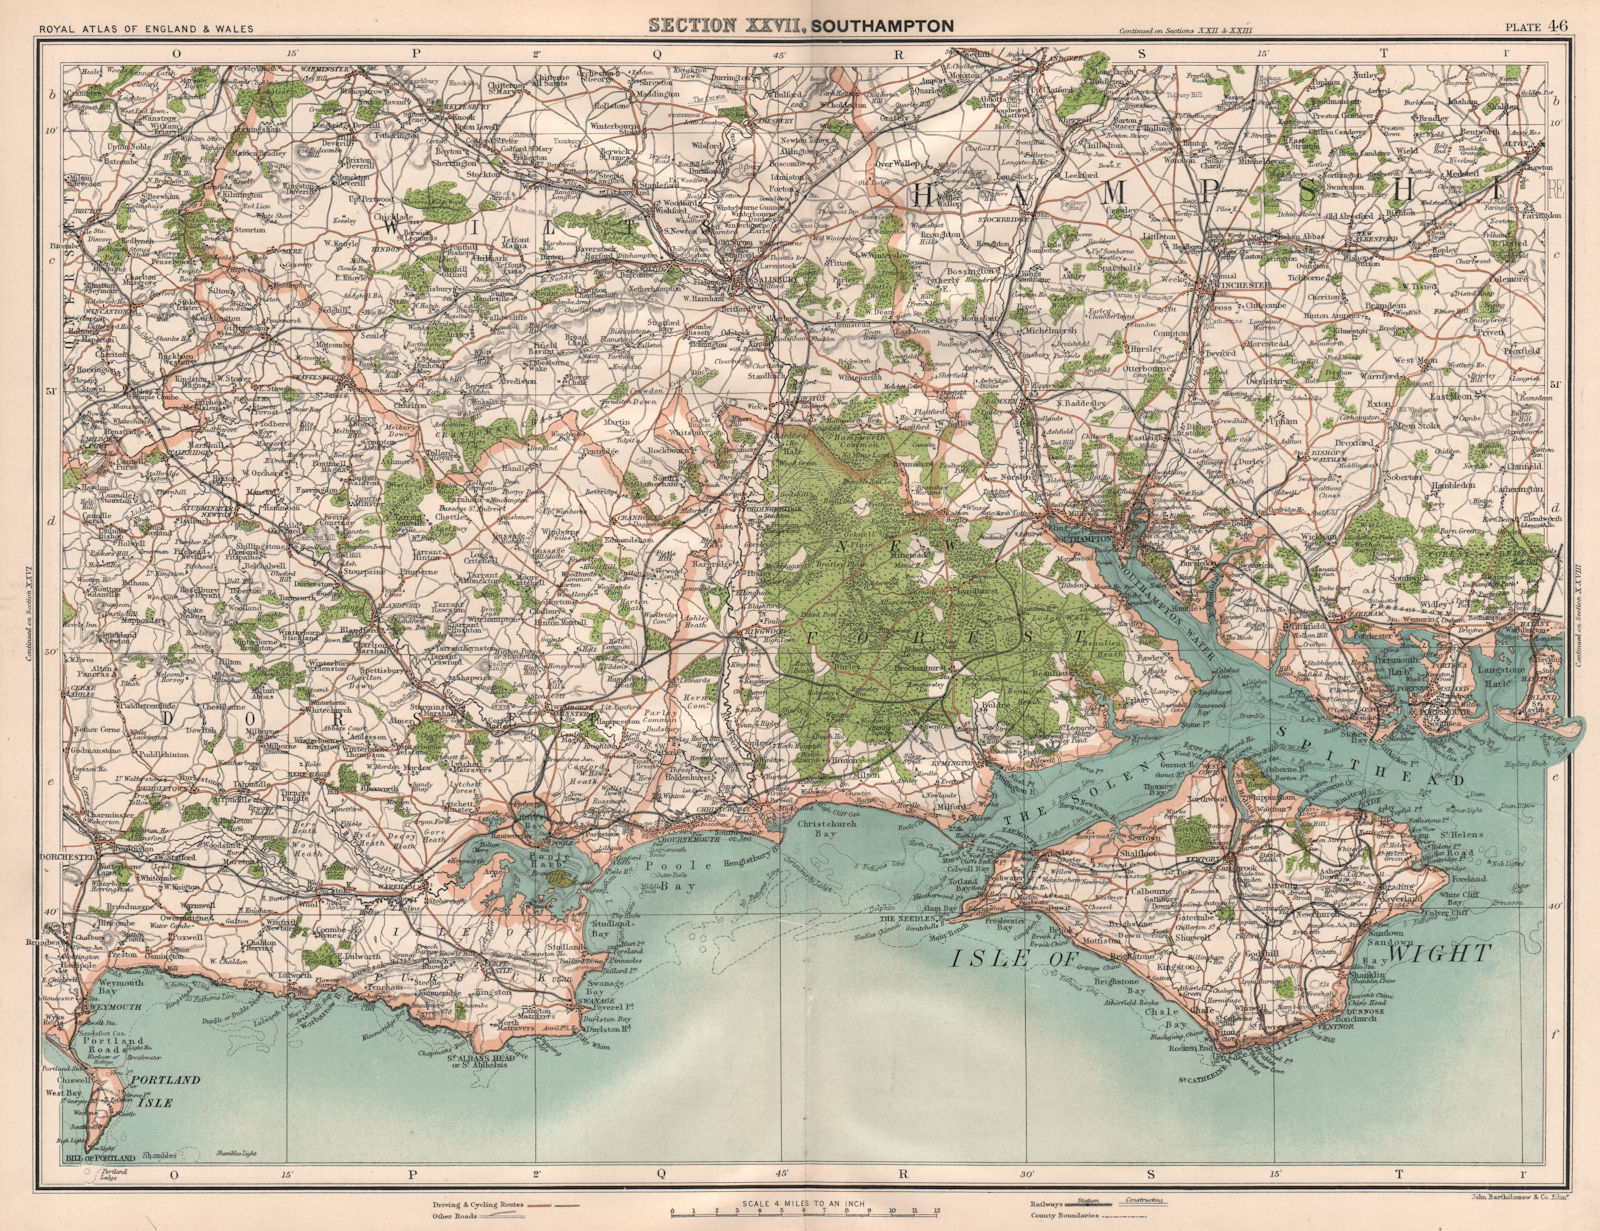 HAMPSHIRE / DORSET COAST. Isle of Wight New Forest Cranbourne Chase 1898 map